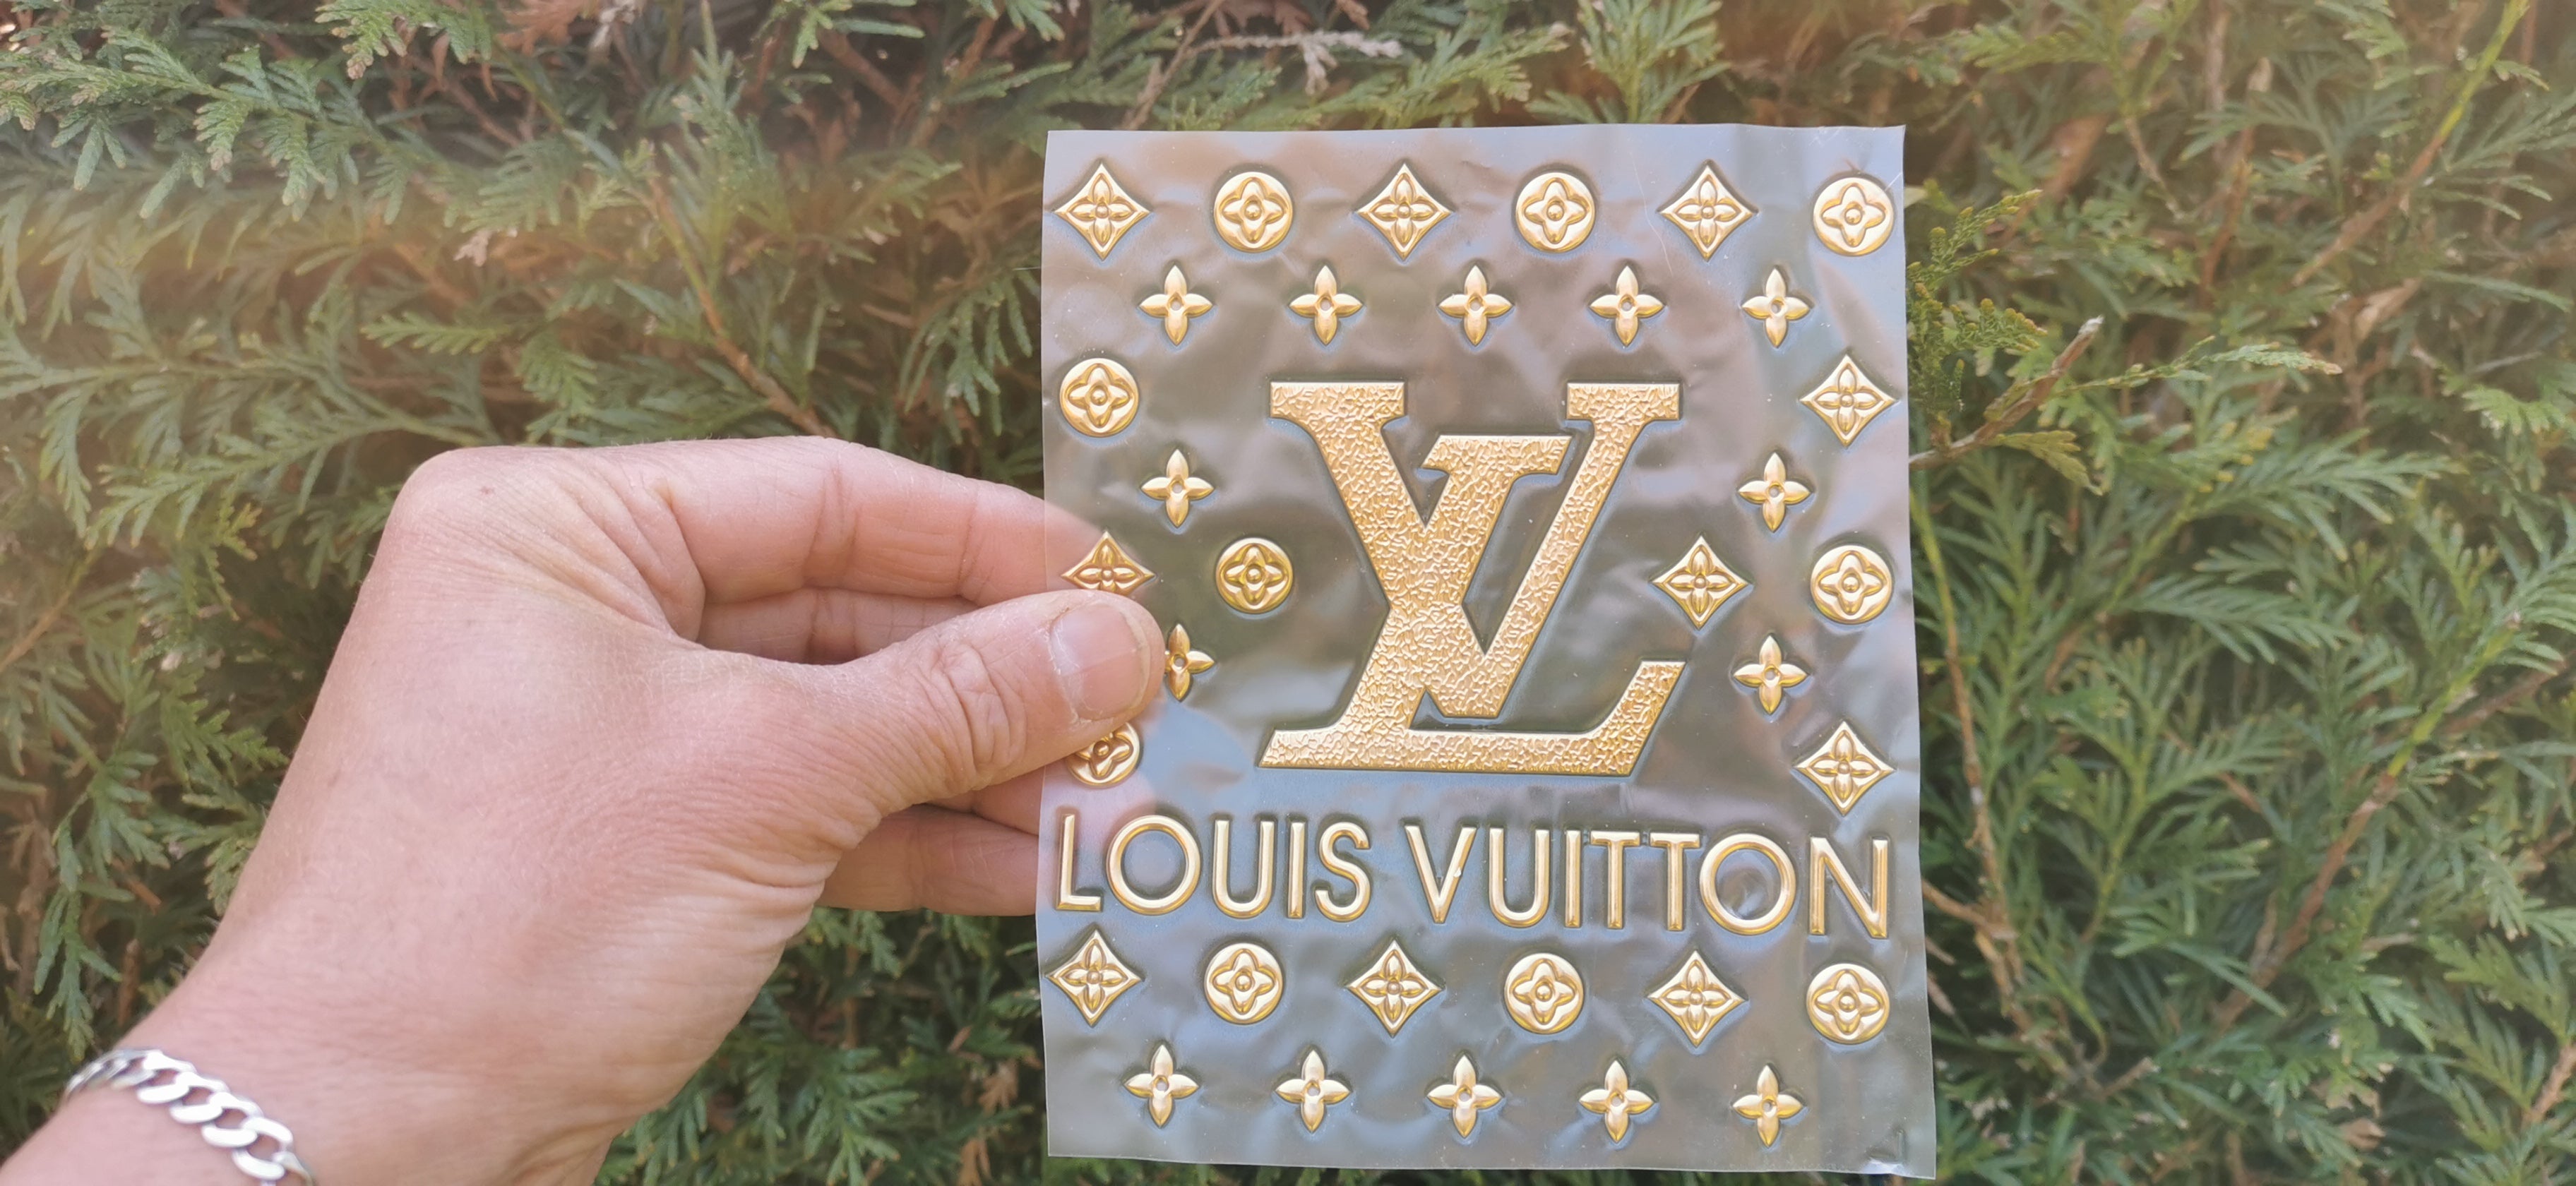 YoNi_1TBZ🔥 on X: @LTYFEED WHY DOES IT LOOK LIKE LOUIS VUITTON LOGO 😭 🖤   / X